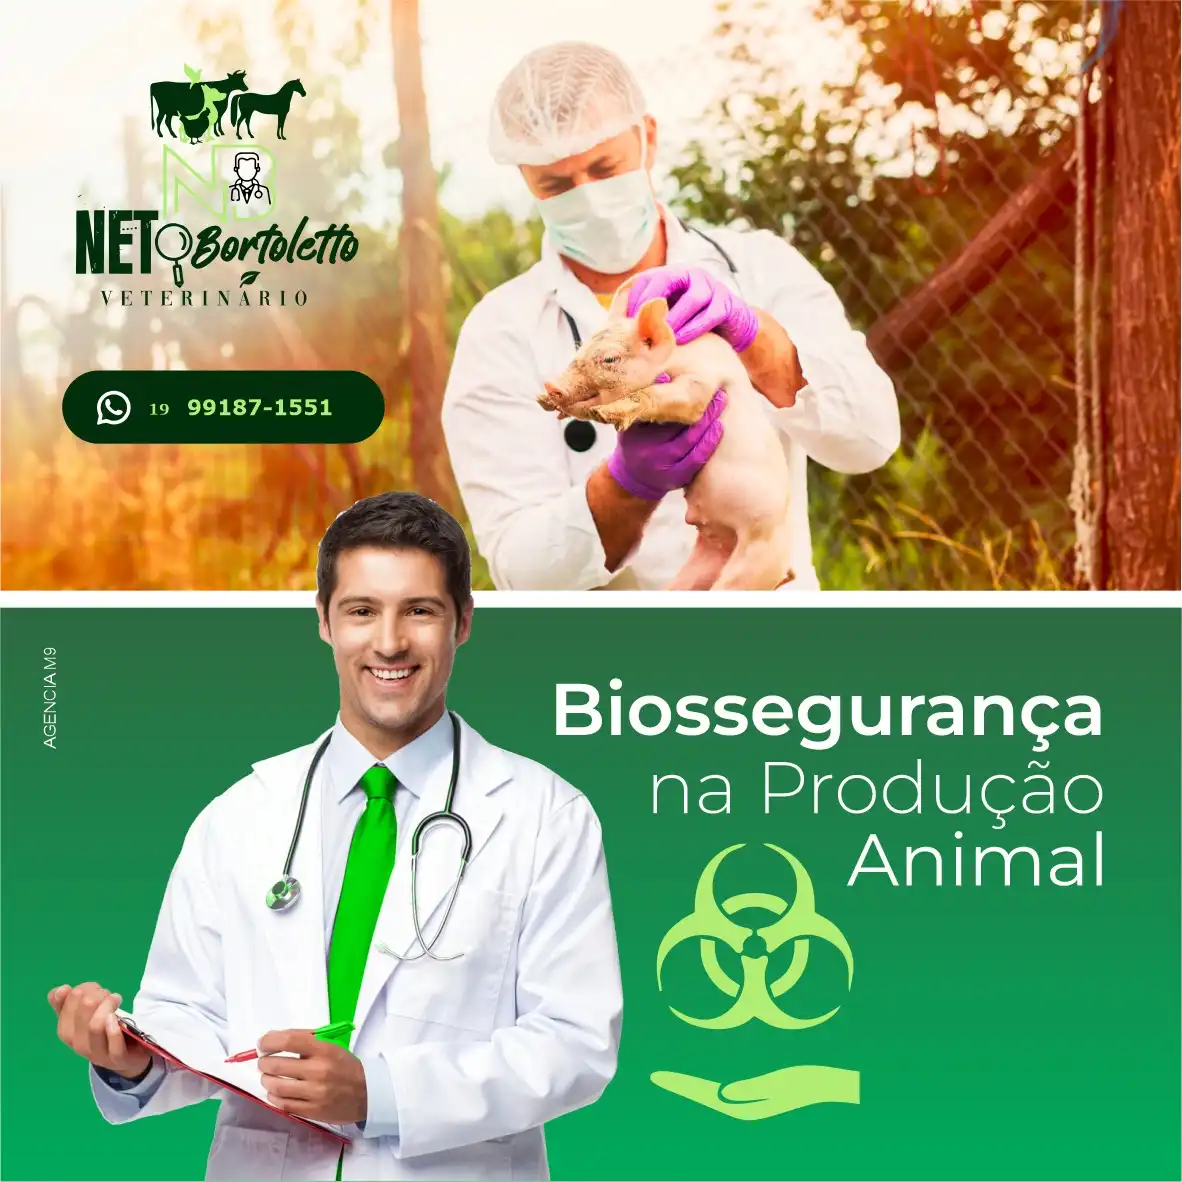 
Propaganda Post Biossegurança na Produção Animal Veterinário



